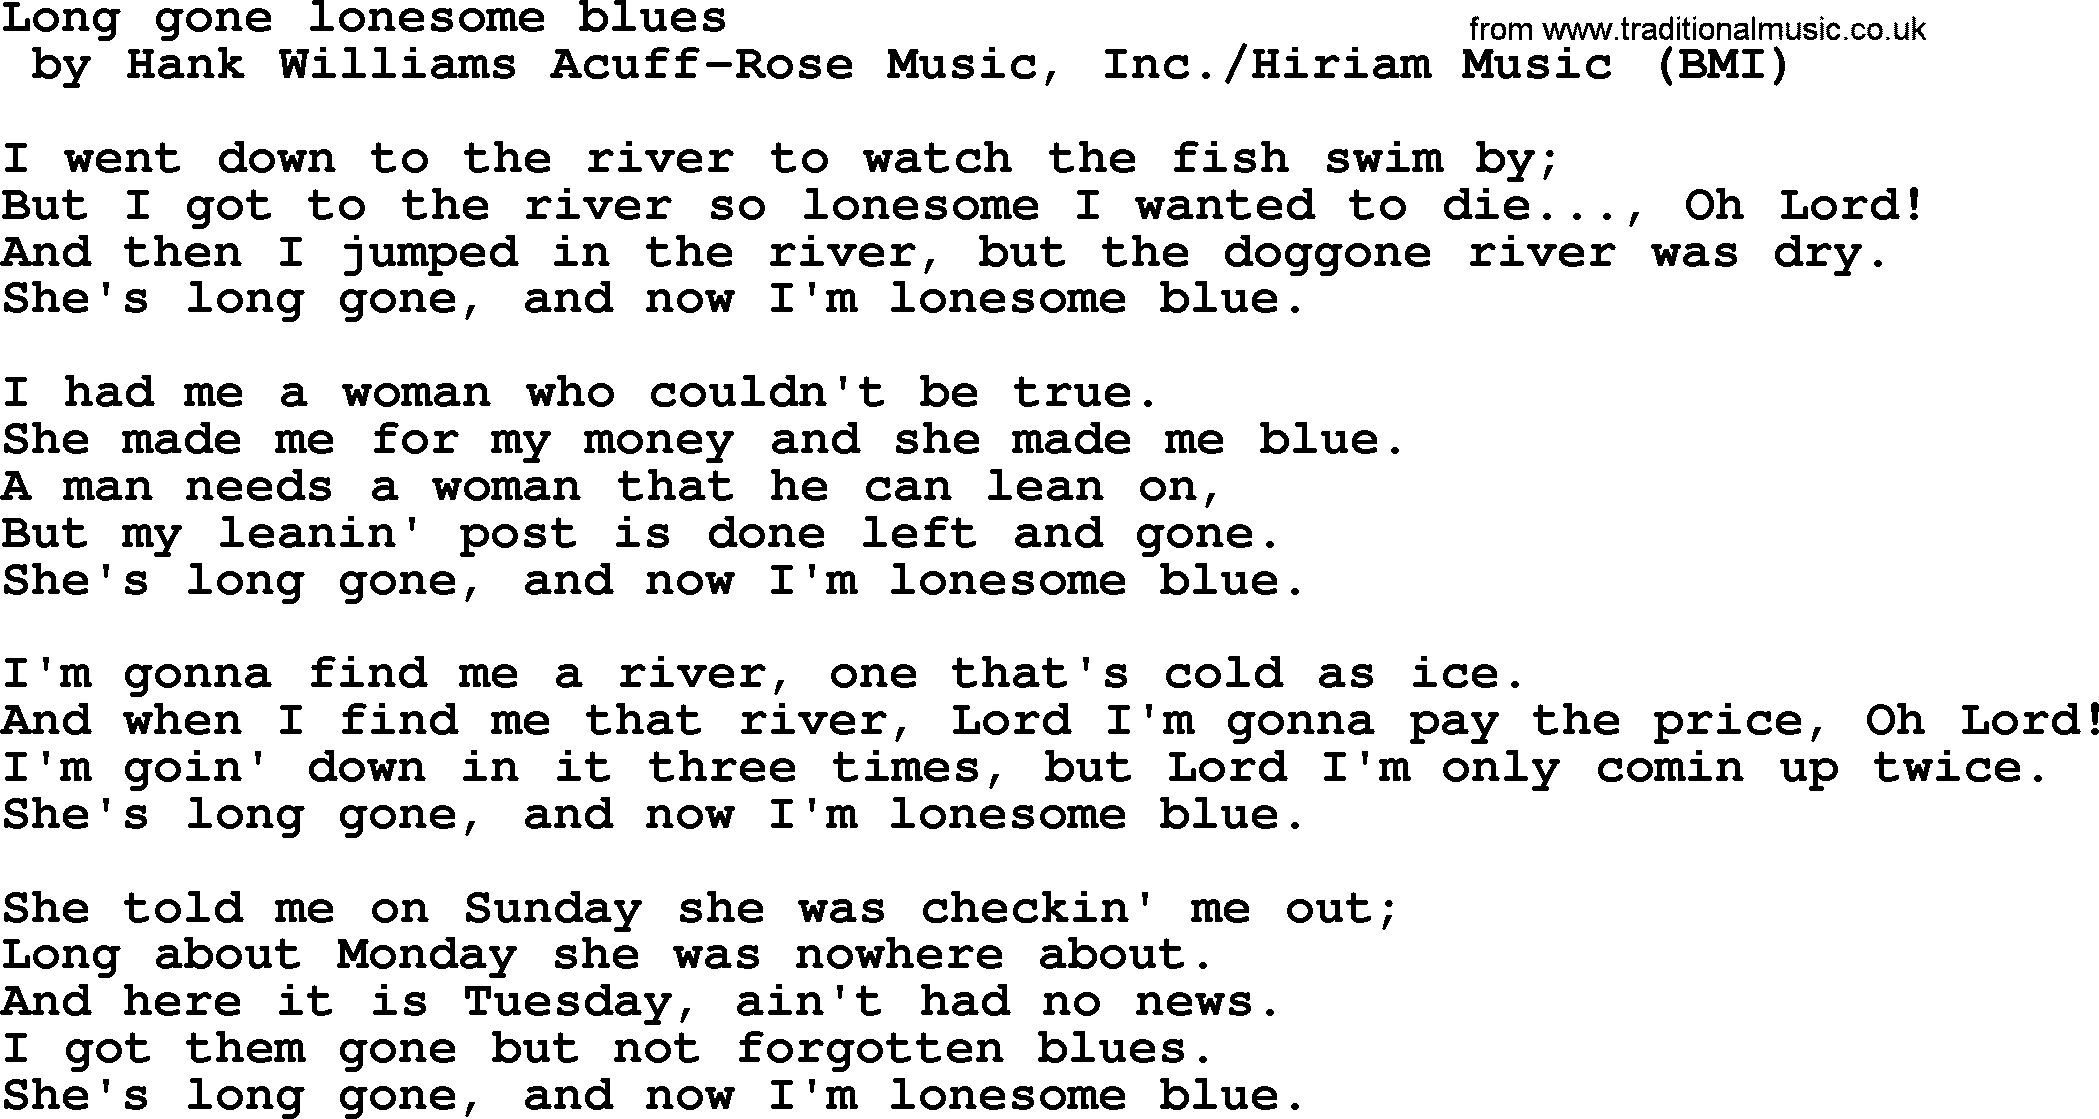 Bruce Springsteen song: Long Gone Lonesome Blues lyrics